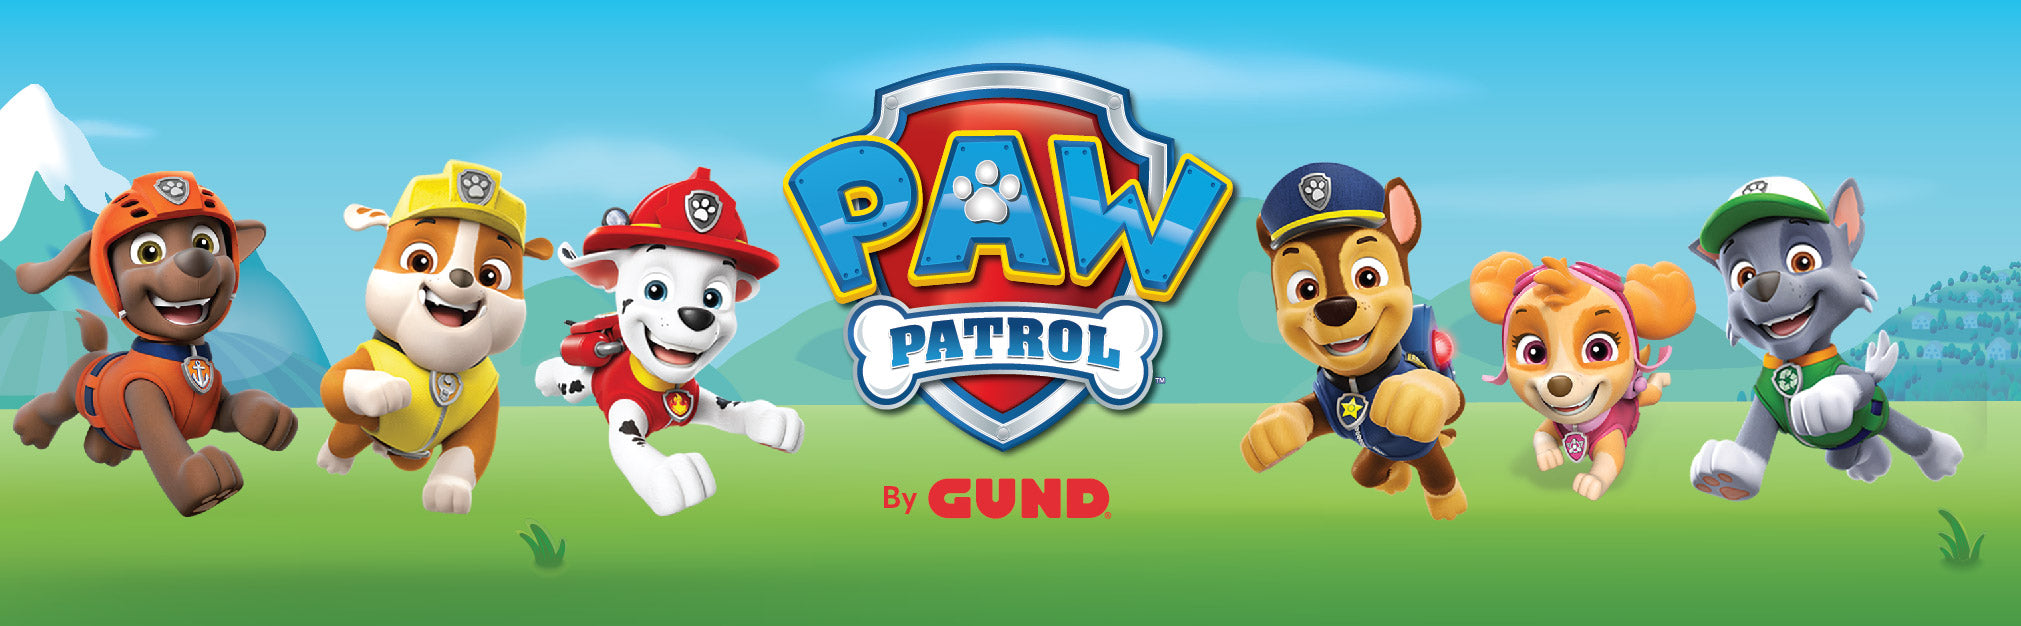 Rex Paw Patrol  Paw patrol characters, Paw patrol party, Chase paw patrol